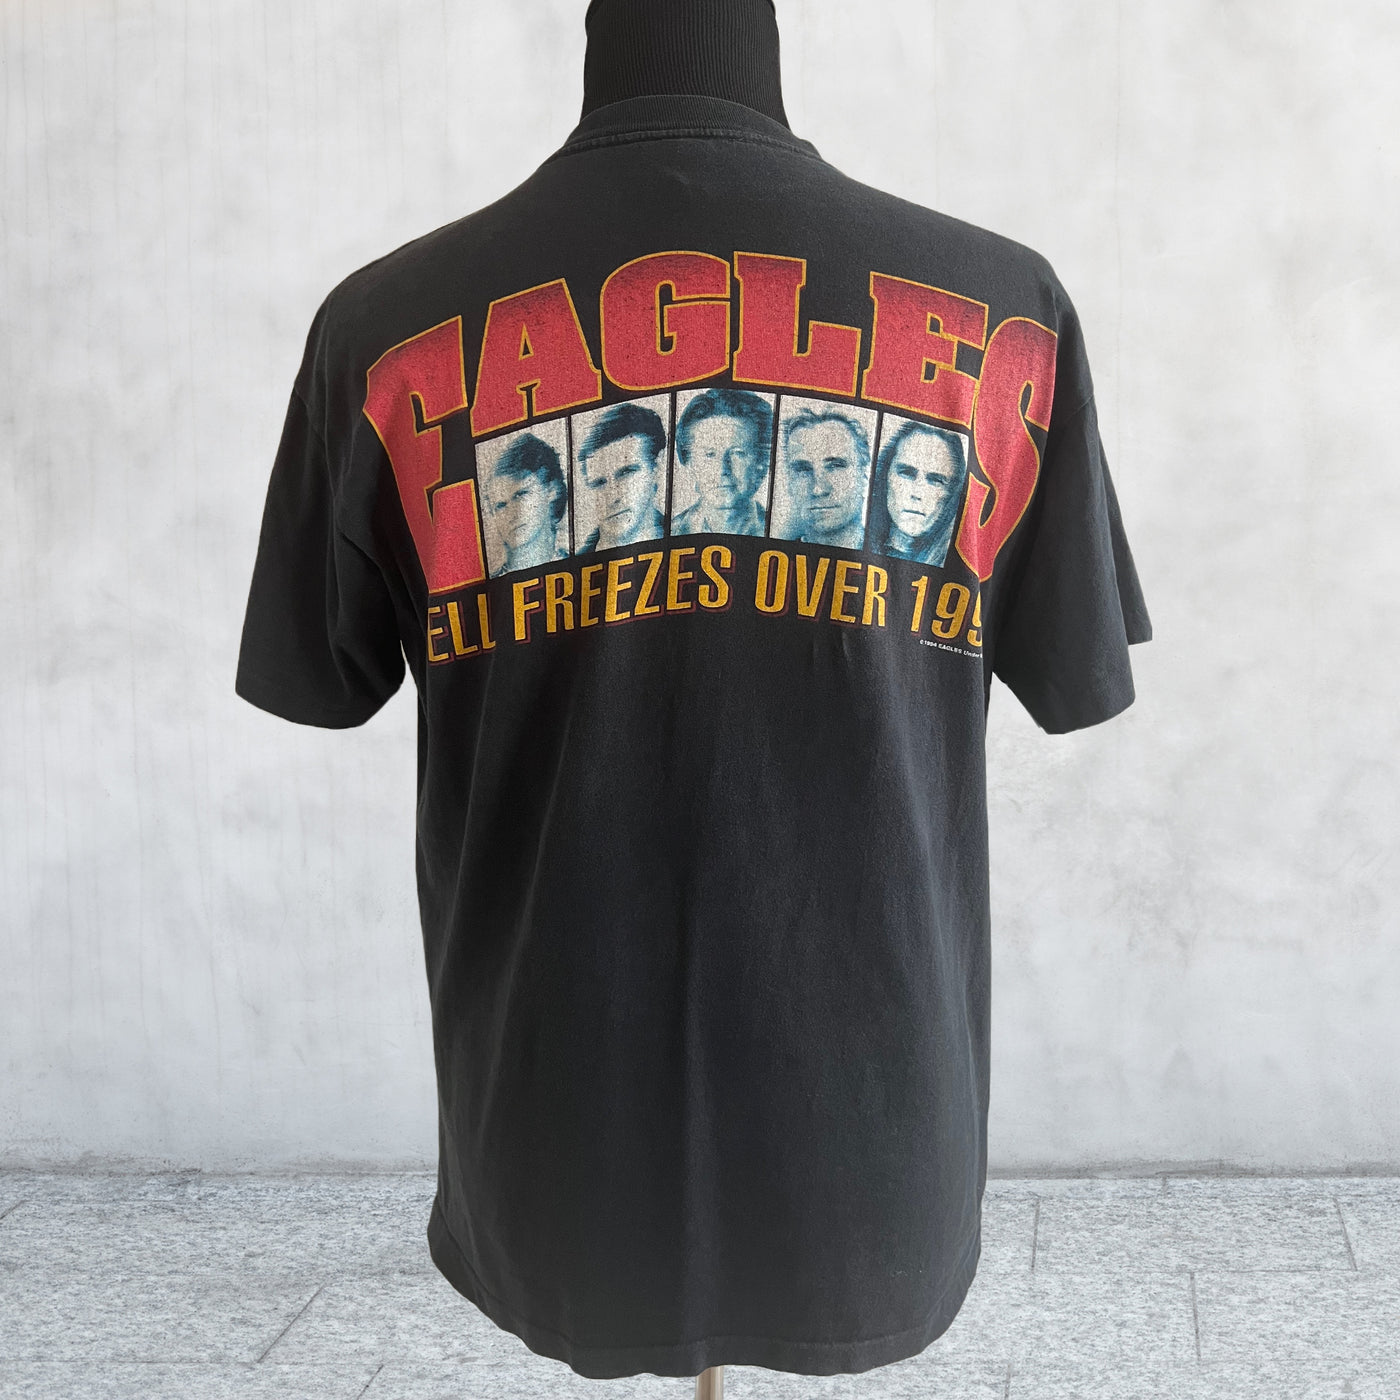 Vintage Eagles Hell Freezes Over World Tour 1994 T-shirt. Large